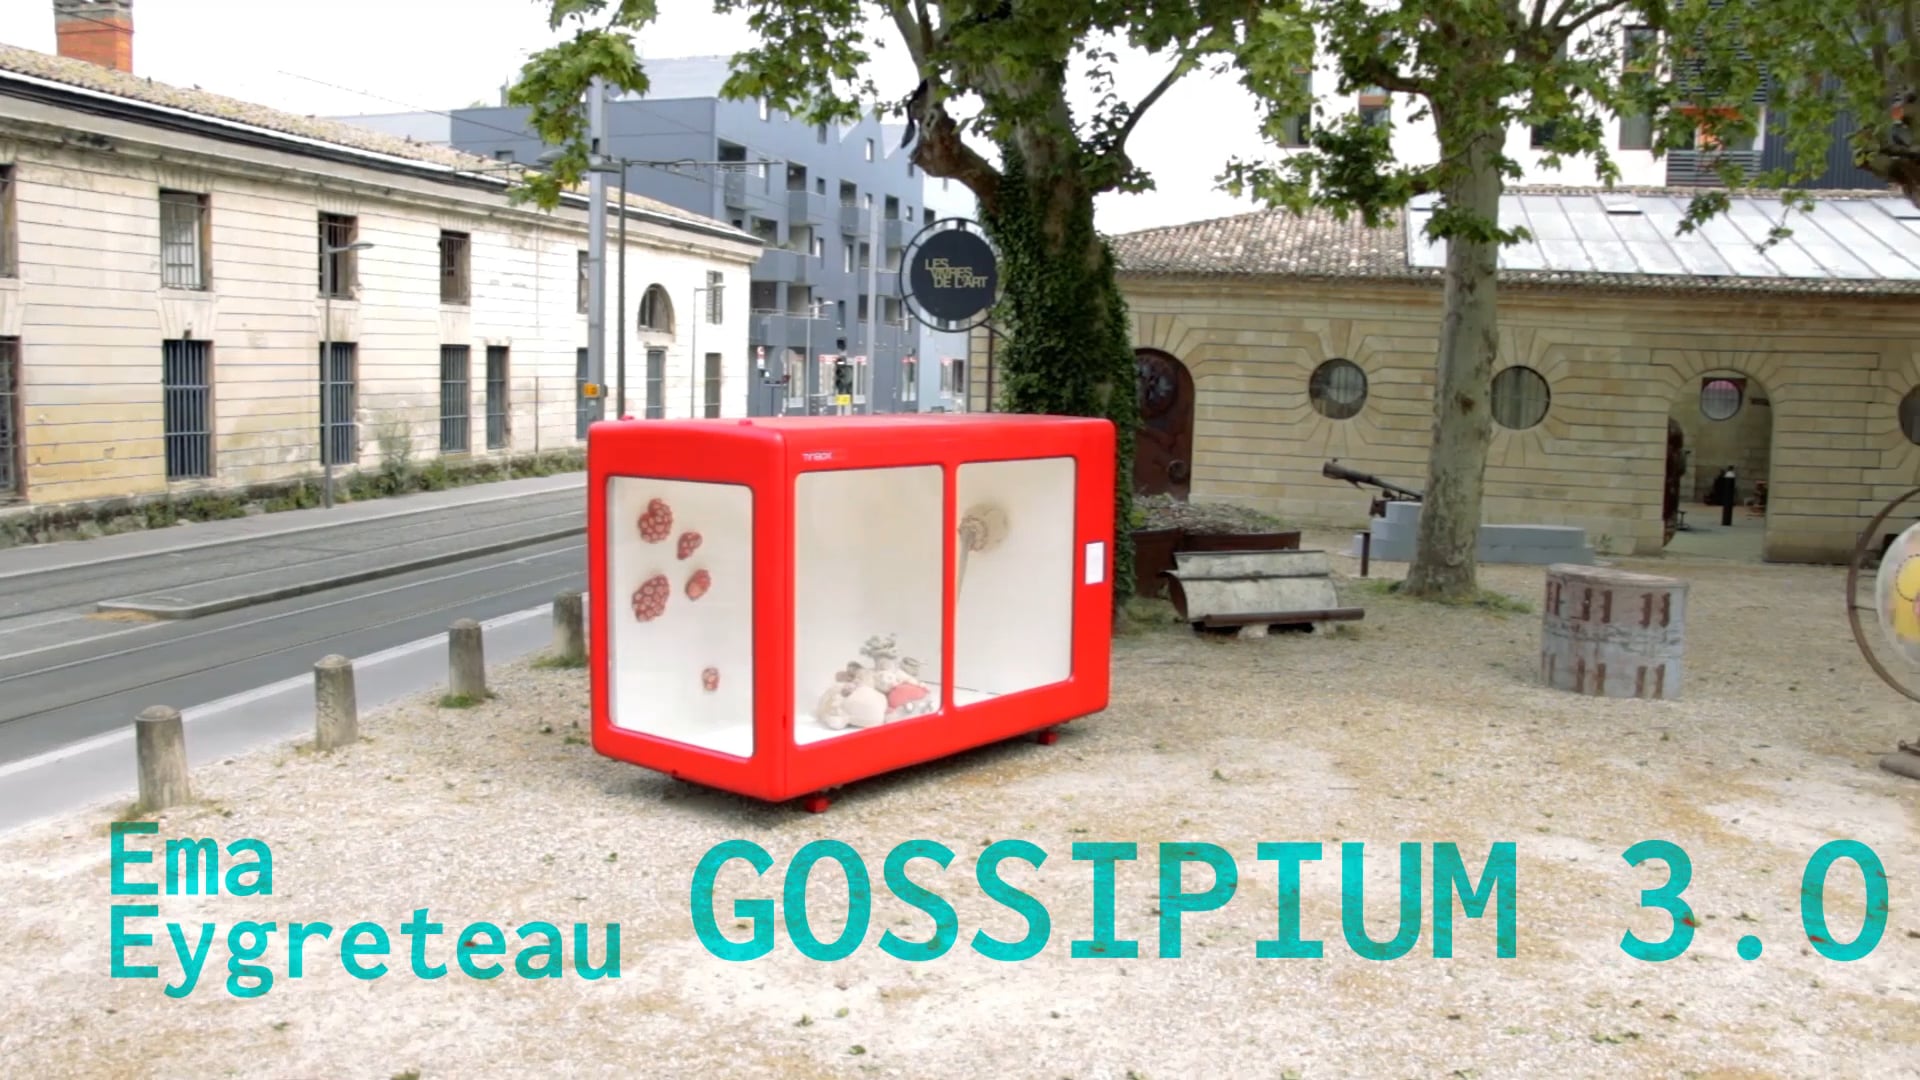 Gossipium 3.0 - Ema Eygreteau - Tinbox #5 - Biennale Organo